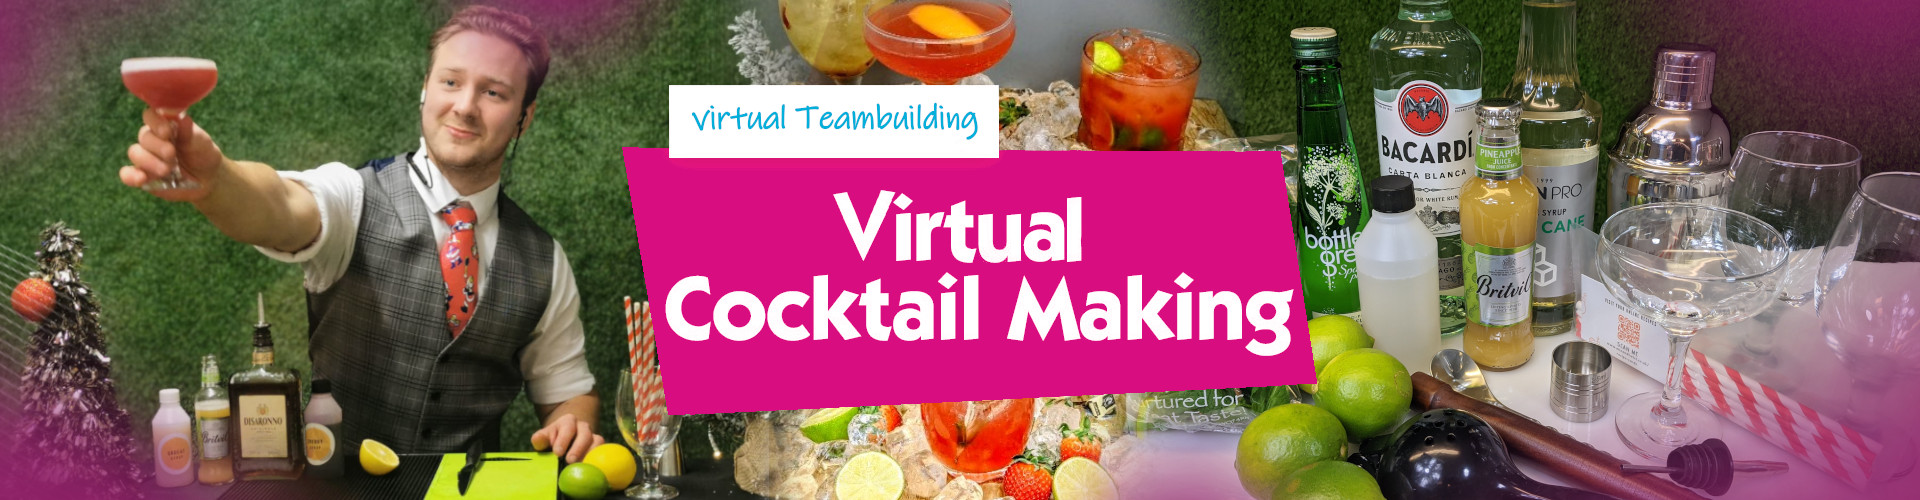 Virtual-CocktailMaking-Banner